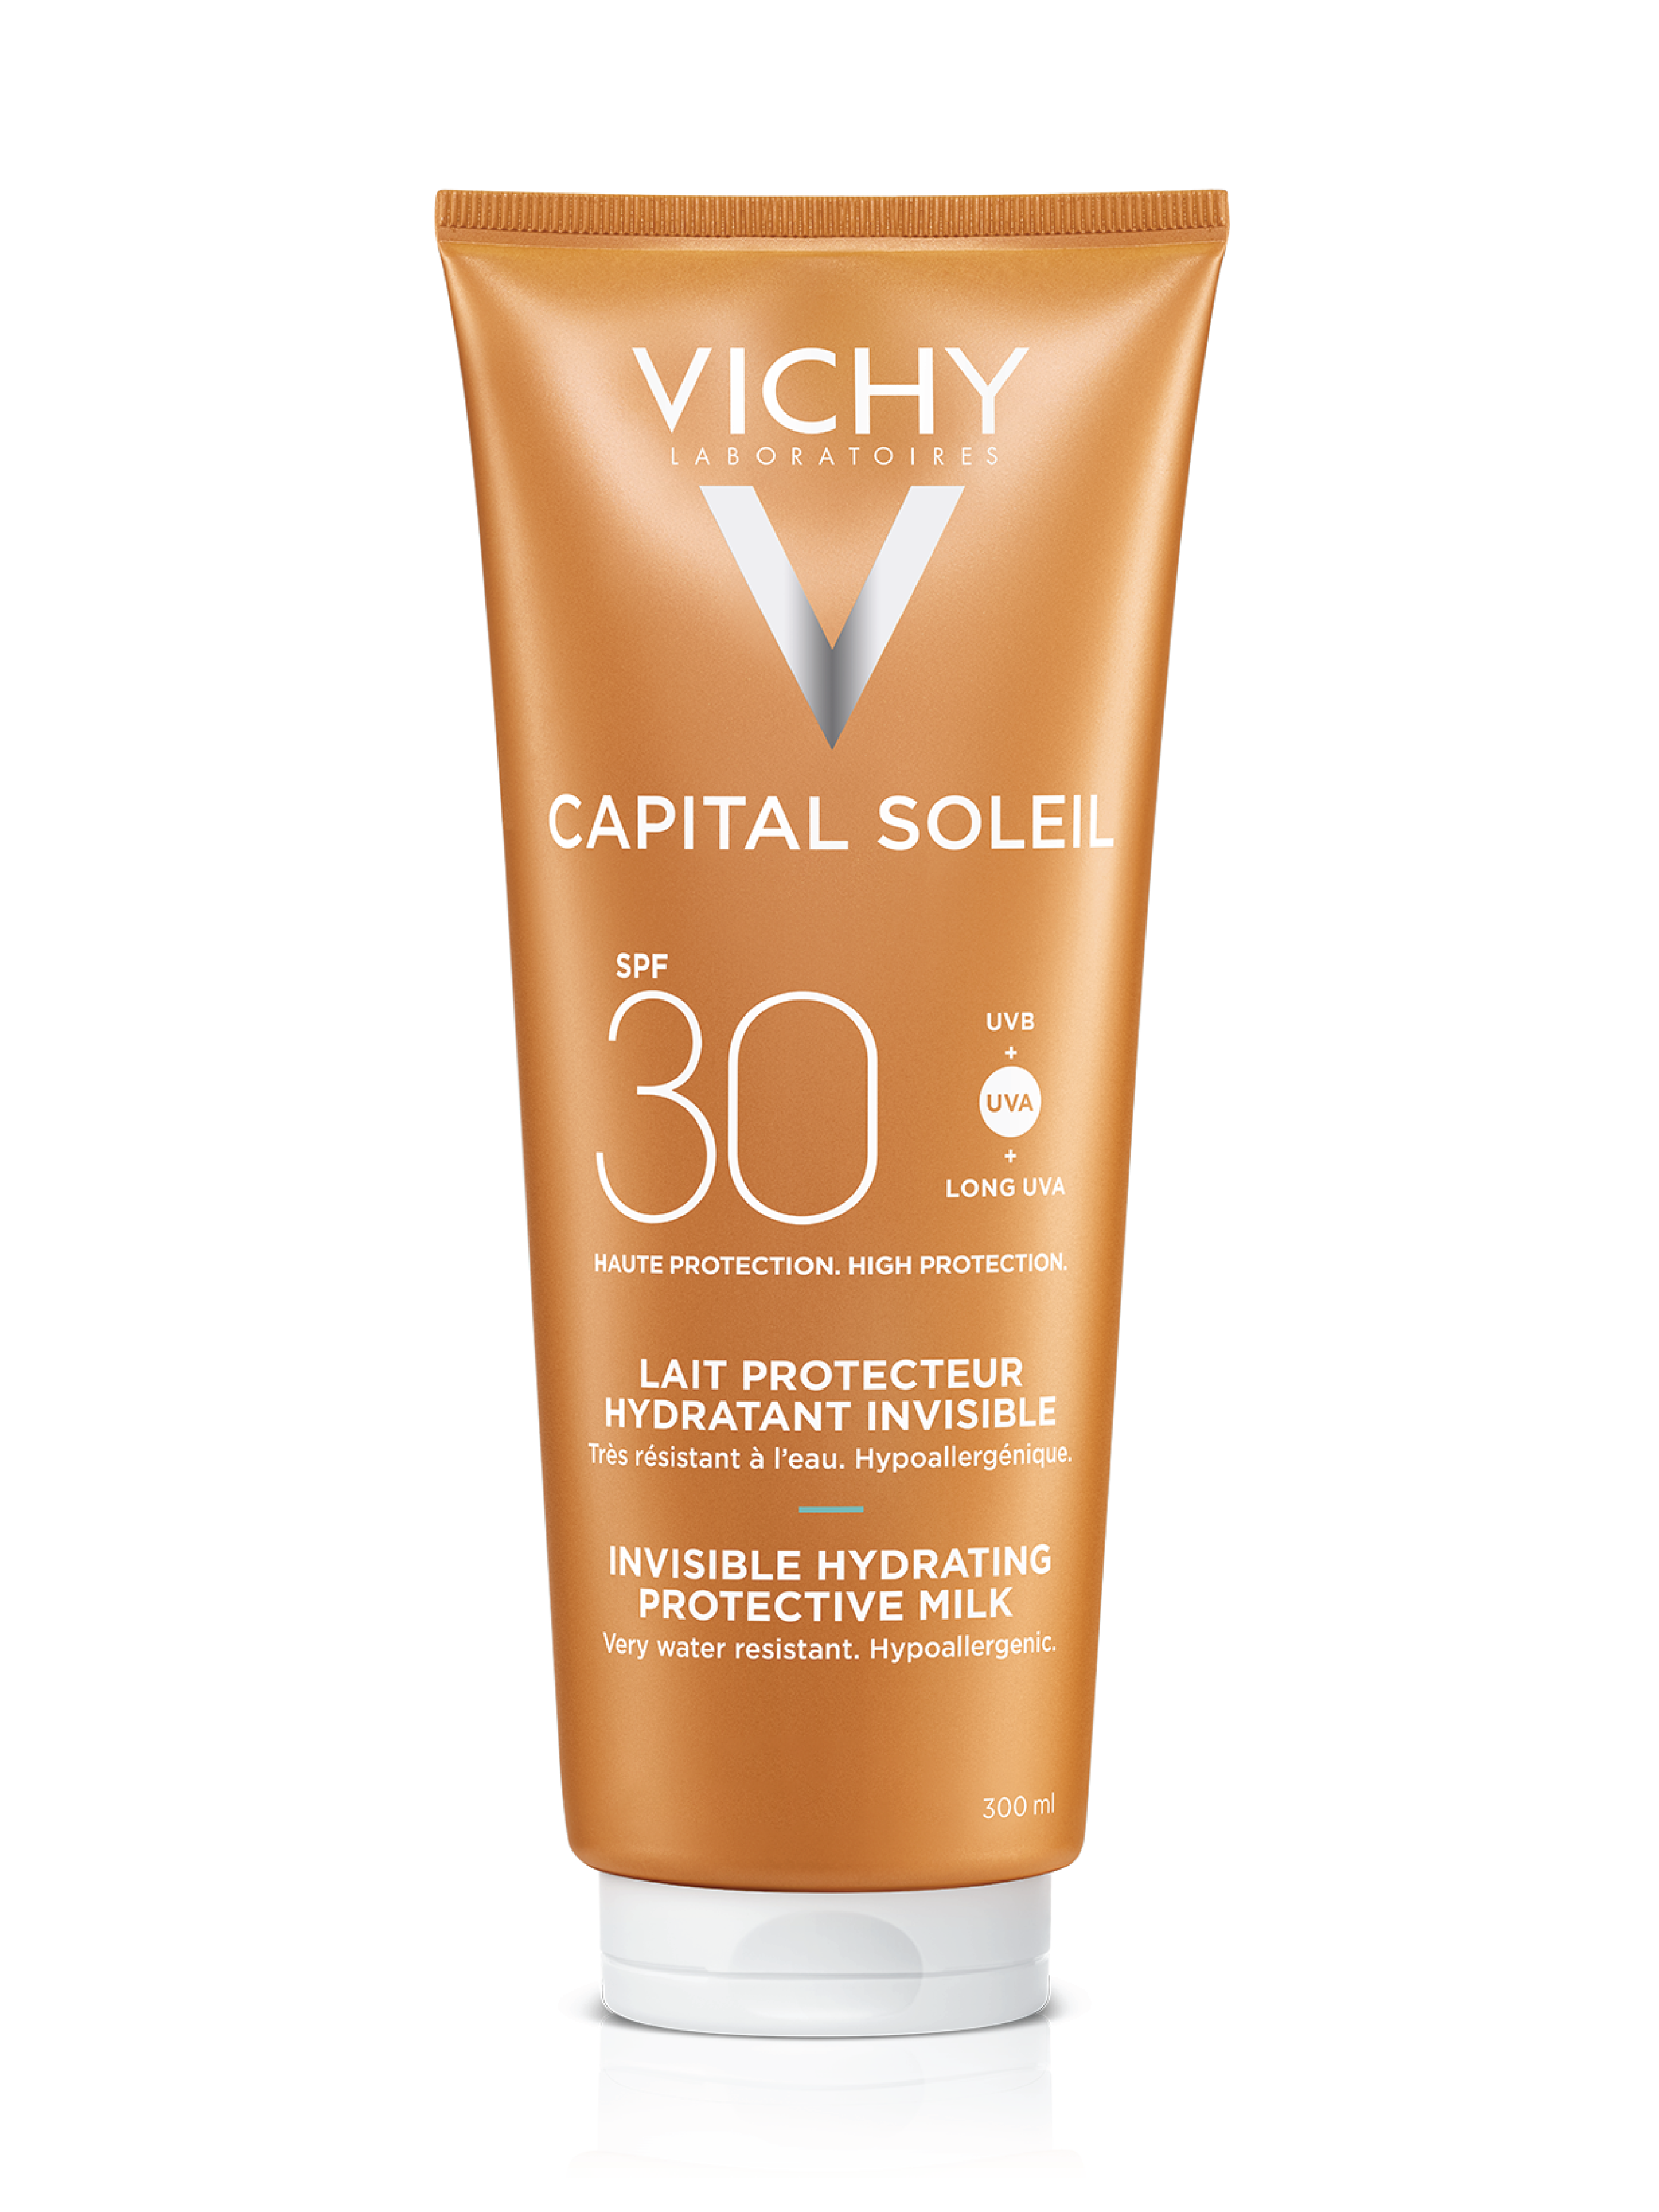 Vichy Capital Soleil Protective Milk SPF30, 300 ml